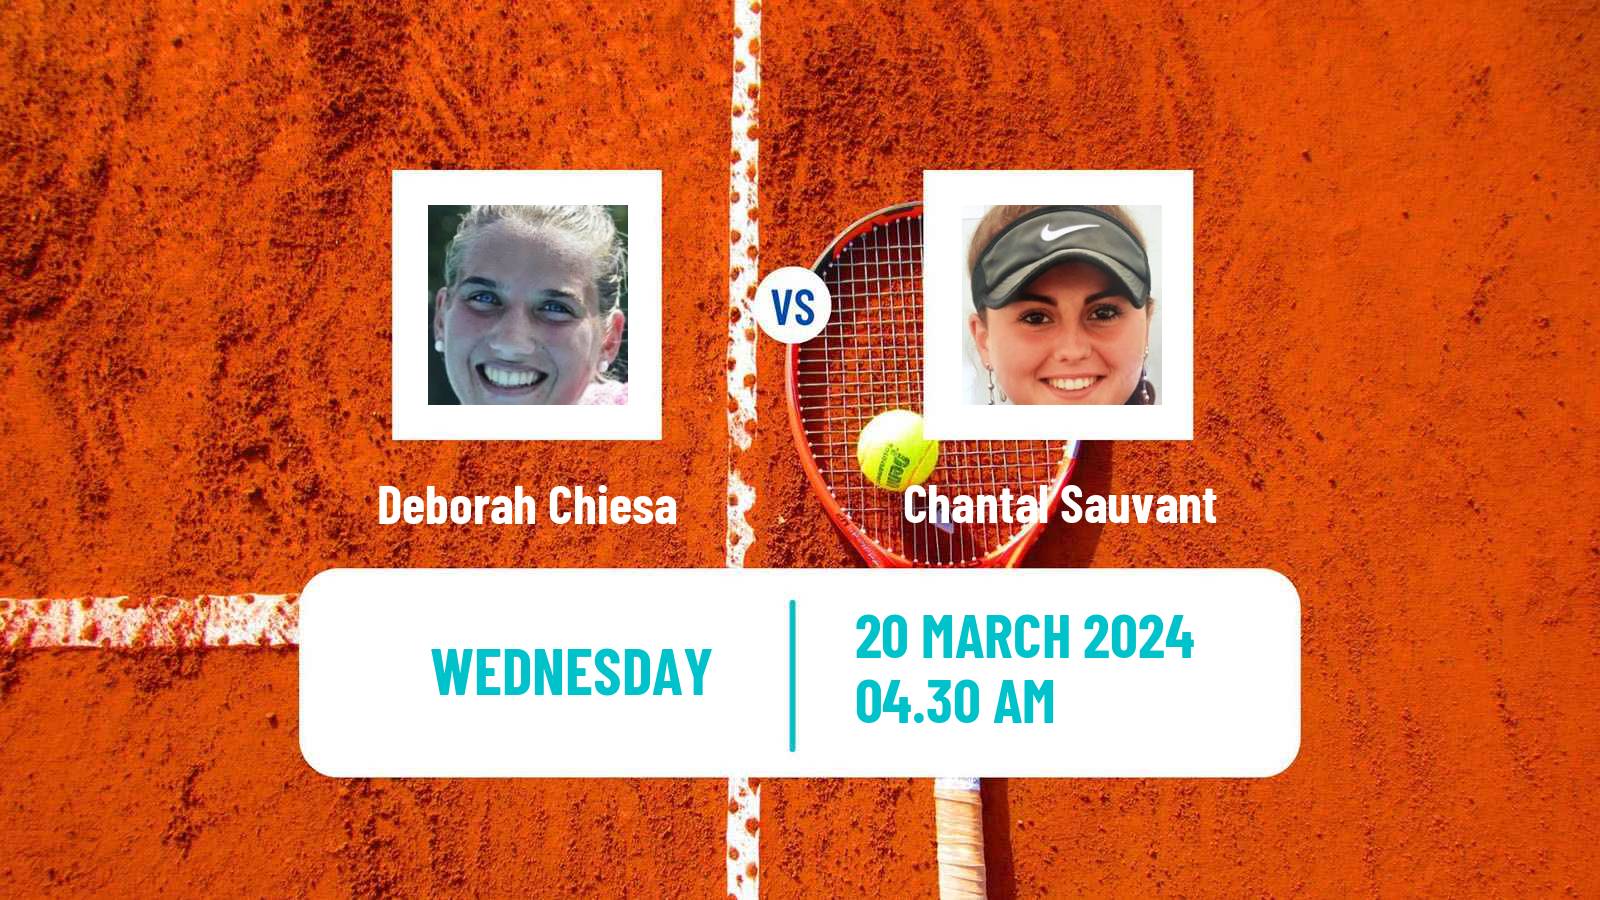 Tennis ITF W35 Alaminos Larnaca 2 Women Deborah Chiesa - Chantal Sauvant